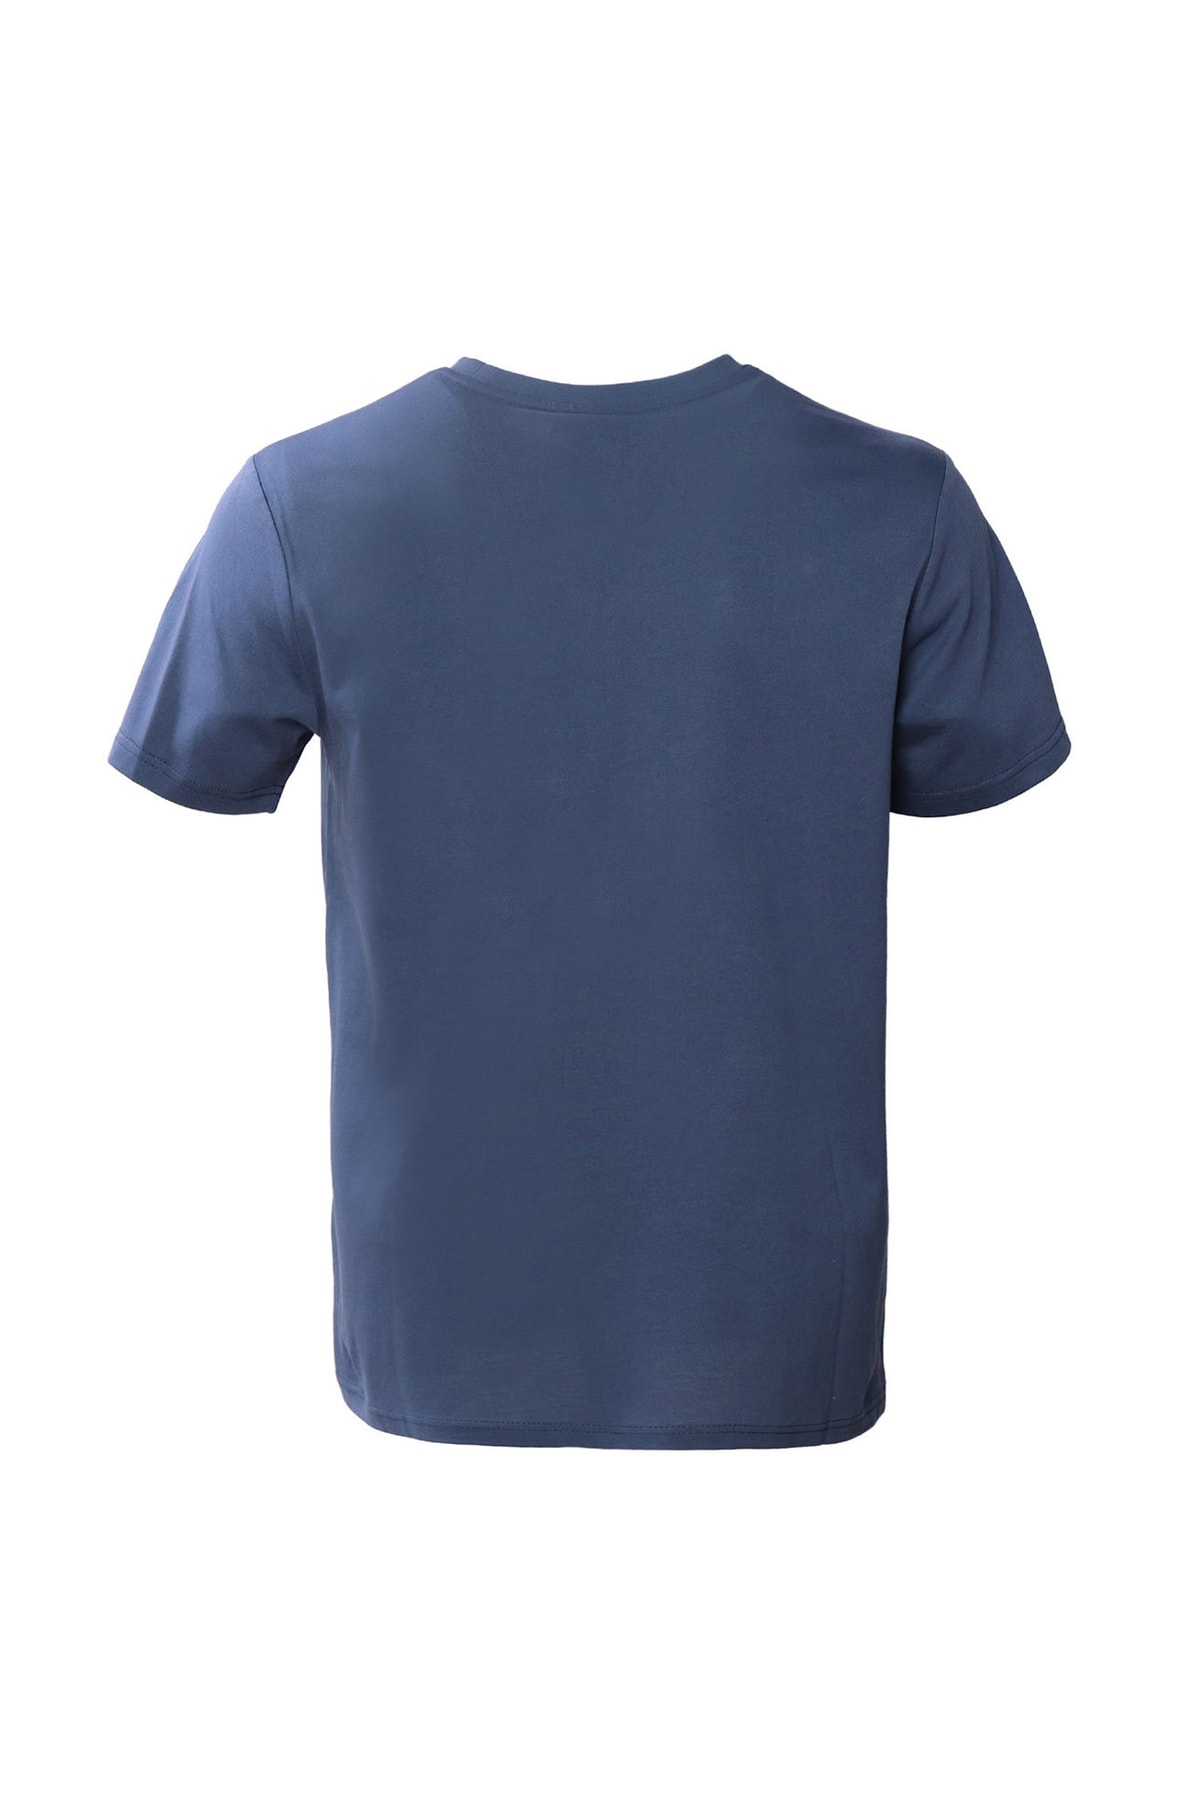 HUMMEL تیشرت مردانه آبی با چاپ یقه خدمه Hmlbugo M